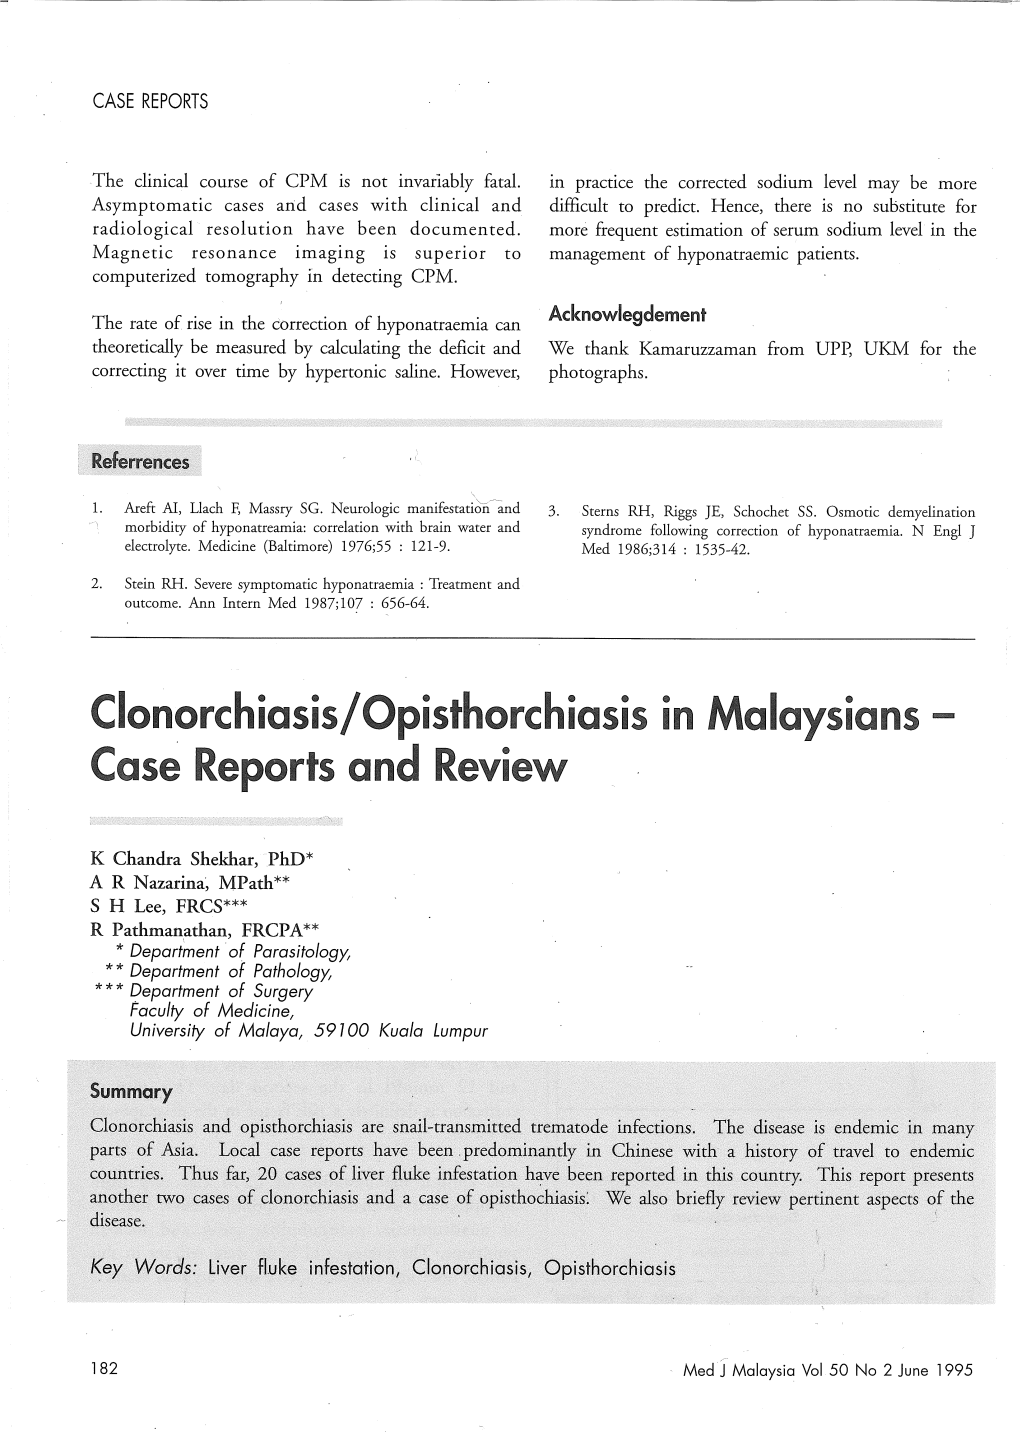 Clonorchiasis/Opisthorchiasis in Malaysians